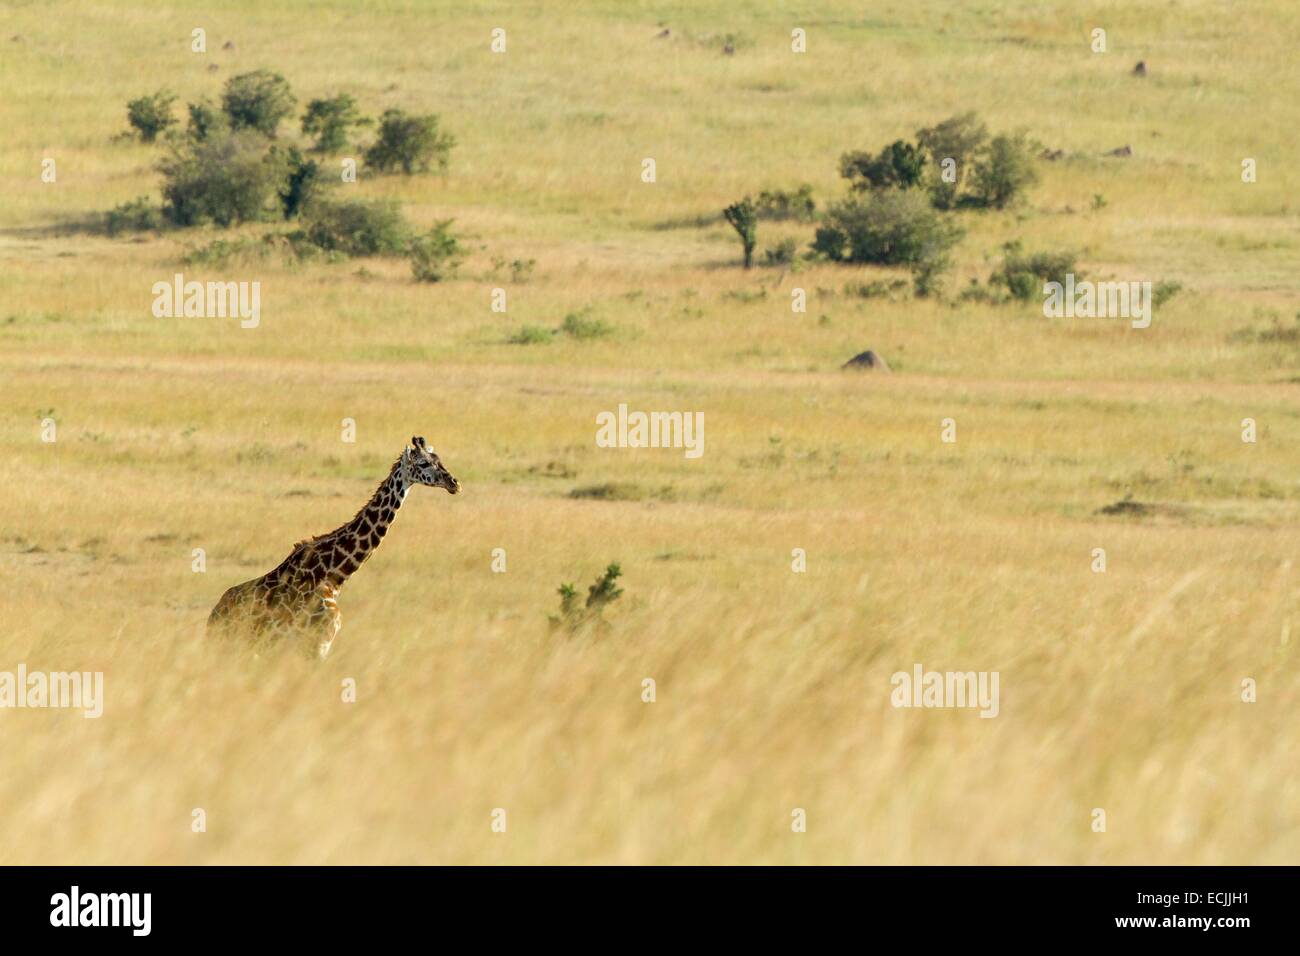 Kenya, Masai-Mara Game Reserve, Girafe masai (Giraffa camelopardalis), uno nella savana in stagione secca Foto Stock